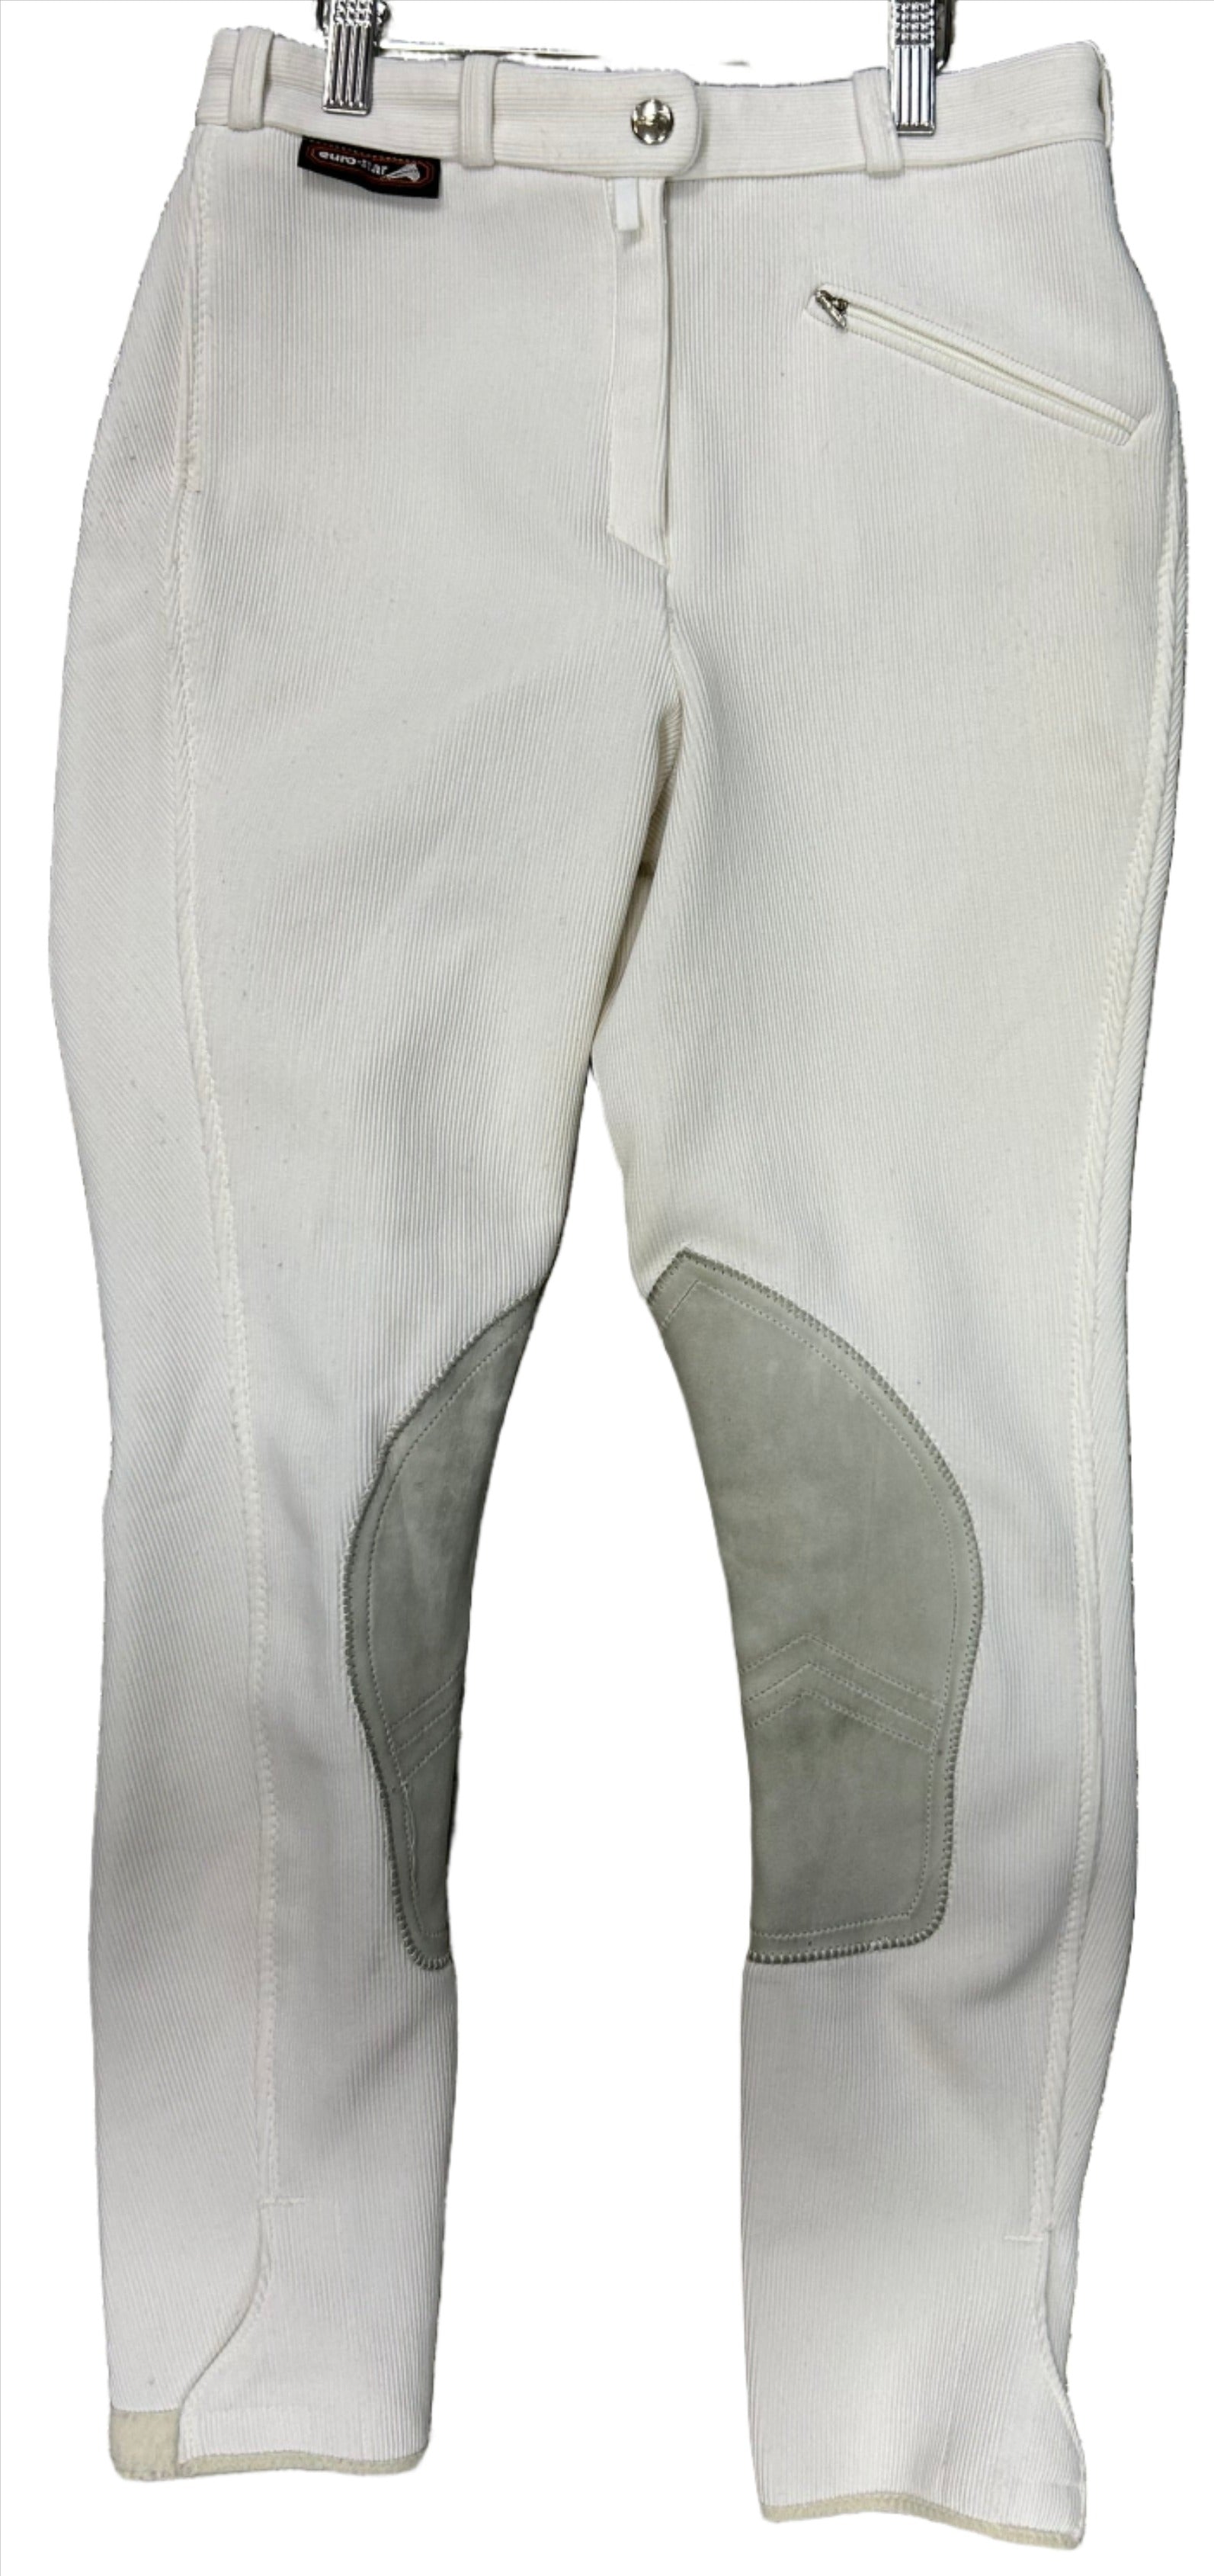 KHS EXCHANGE Euro-Star white knee patch breech 40